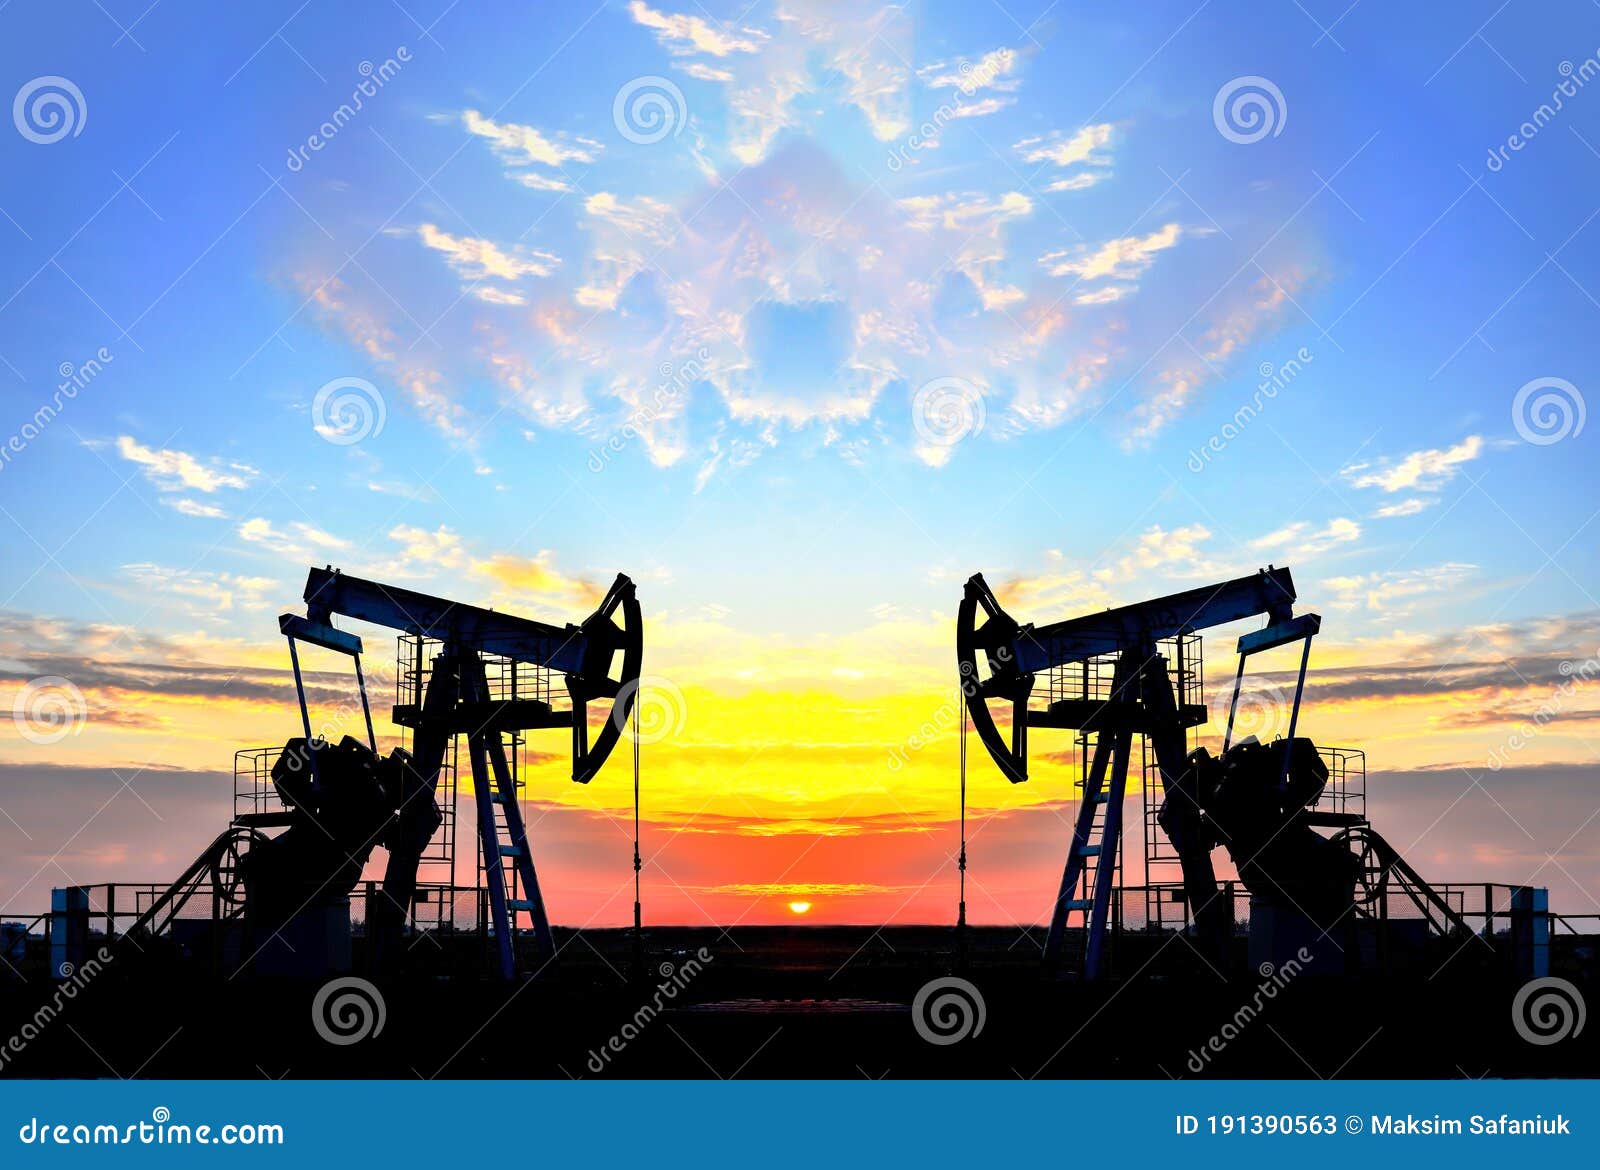 https://thumbs.dreamstime.com/z/oil-drilling-derricks-desert-oilfield-fossil-fuels-output-crude-oil-production-ground-oil-drill-rig-pump-191390563.jpg